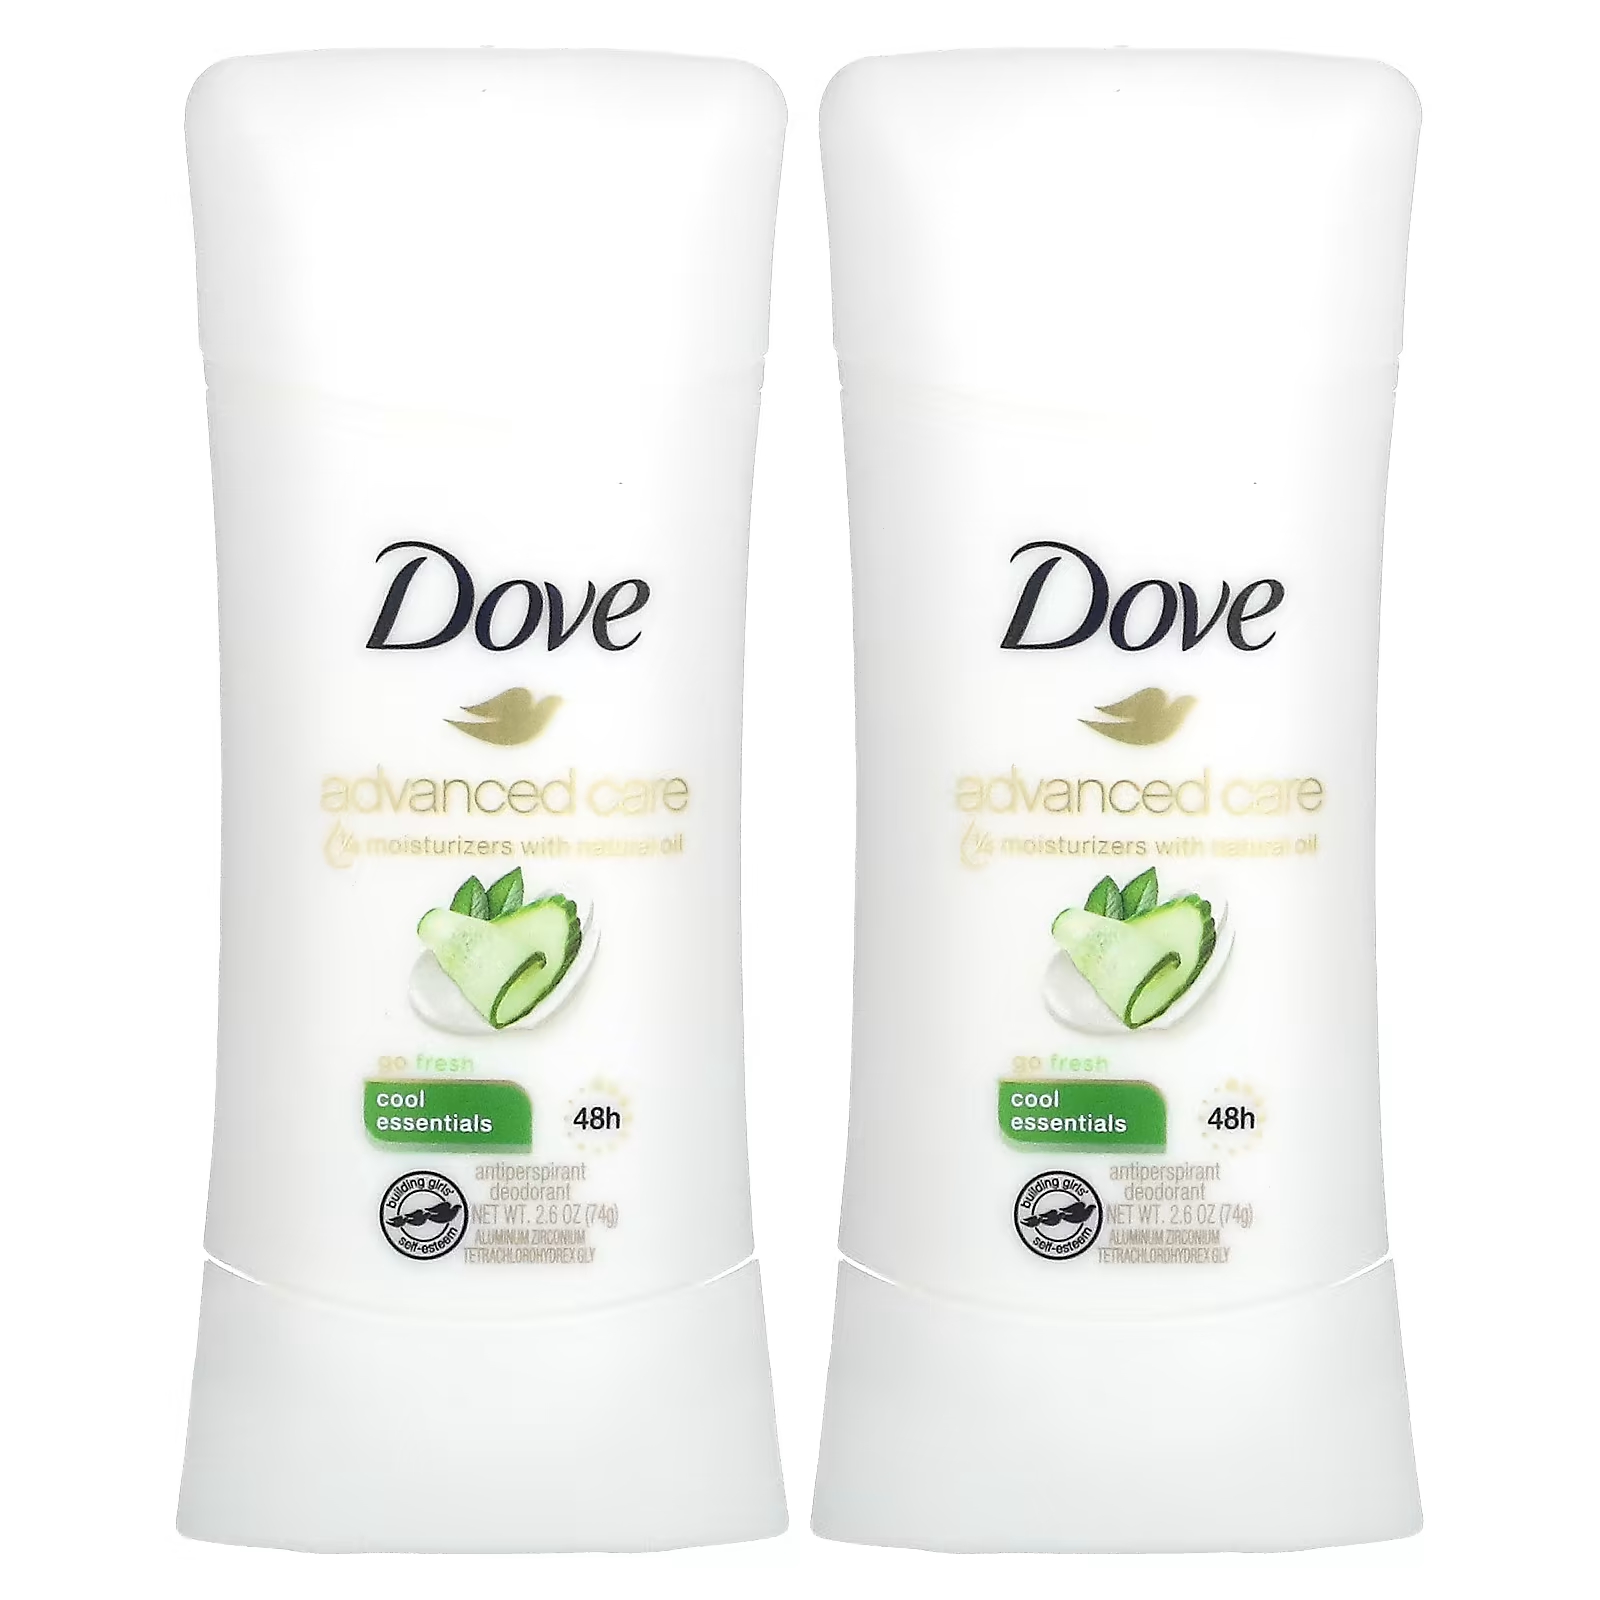 Дезодорант-антиперспирант Dove Advanced Care Go Fresh, 2 упаковки по 74 г цена и фото